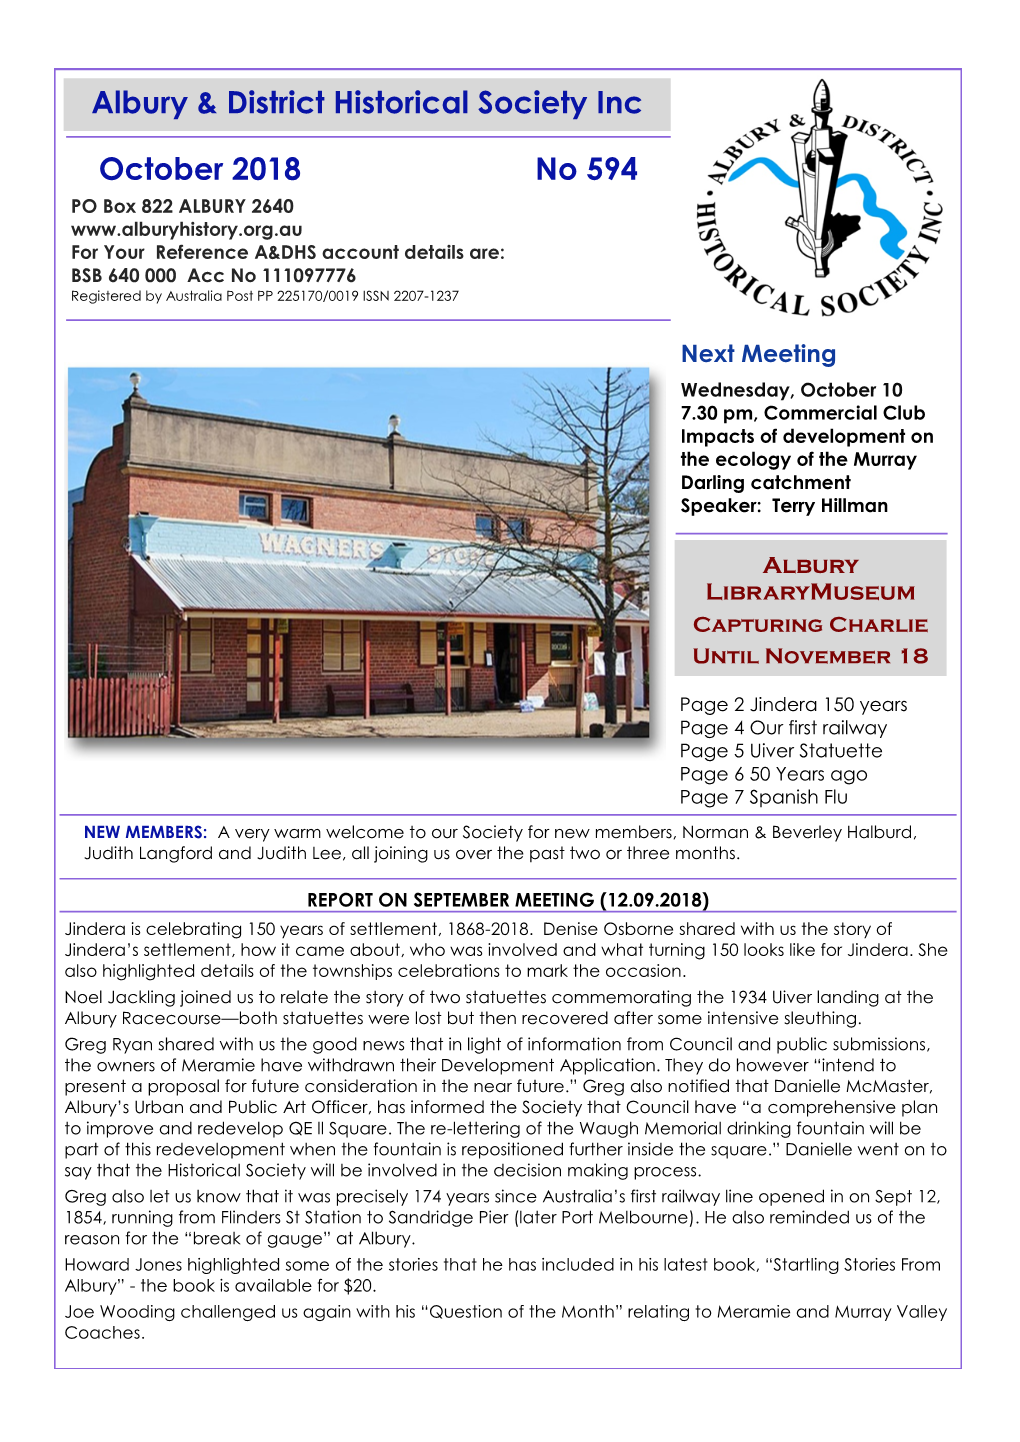 Albury & District Historical Society Inc October 2018 No